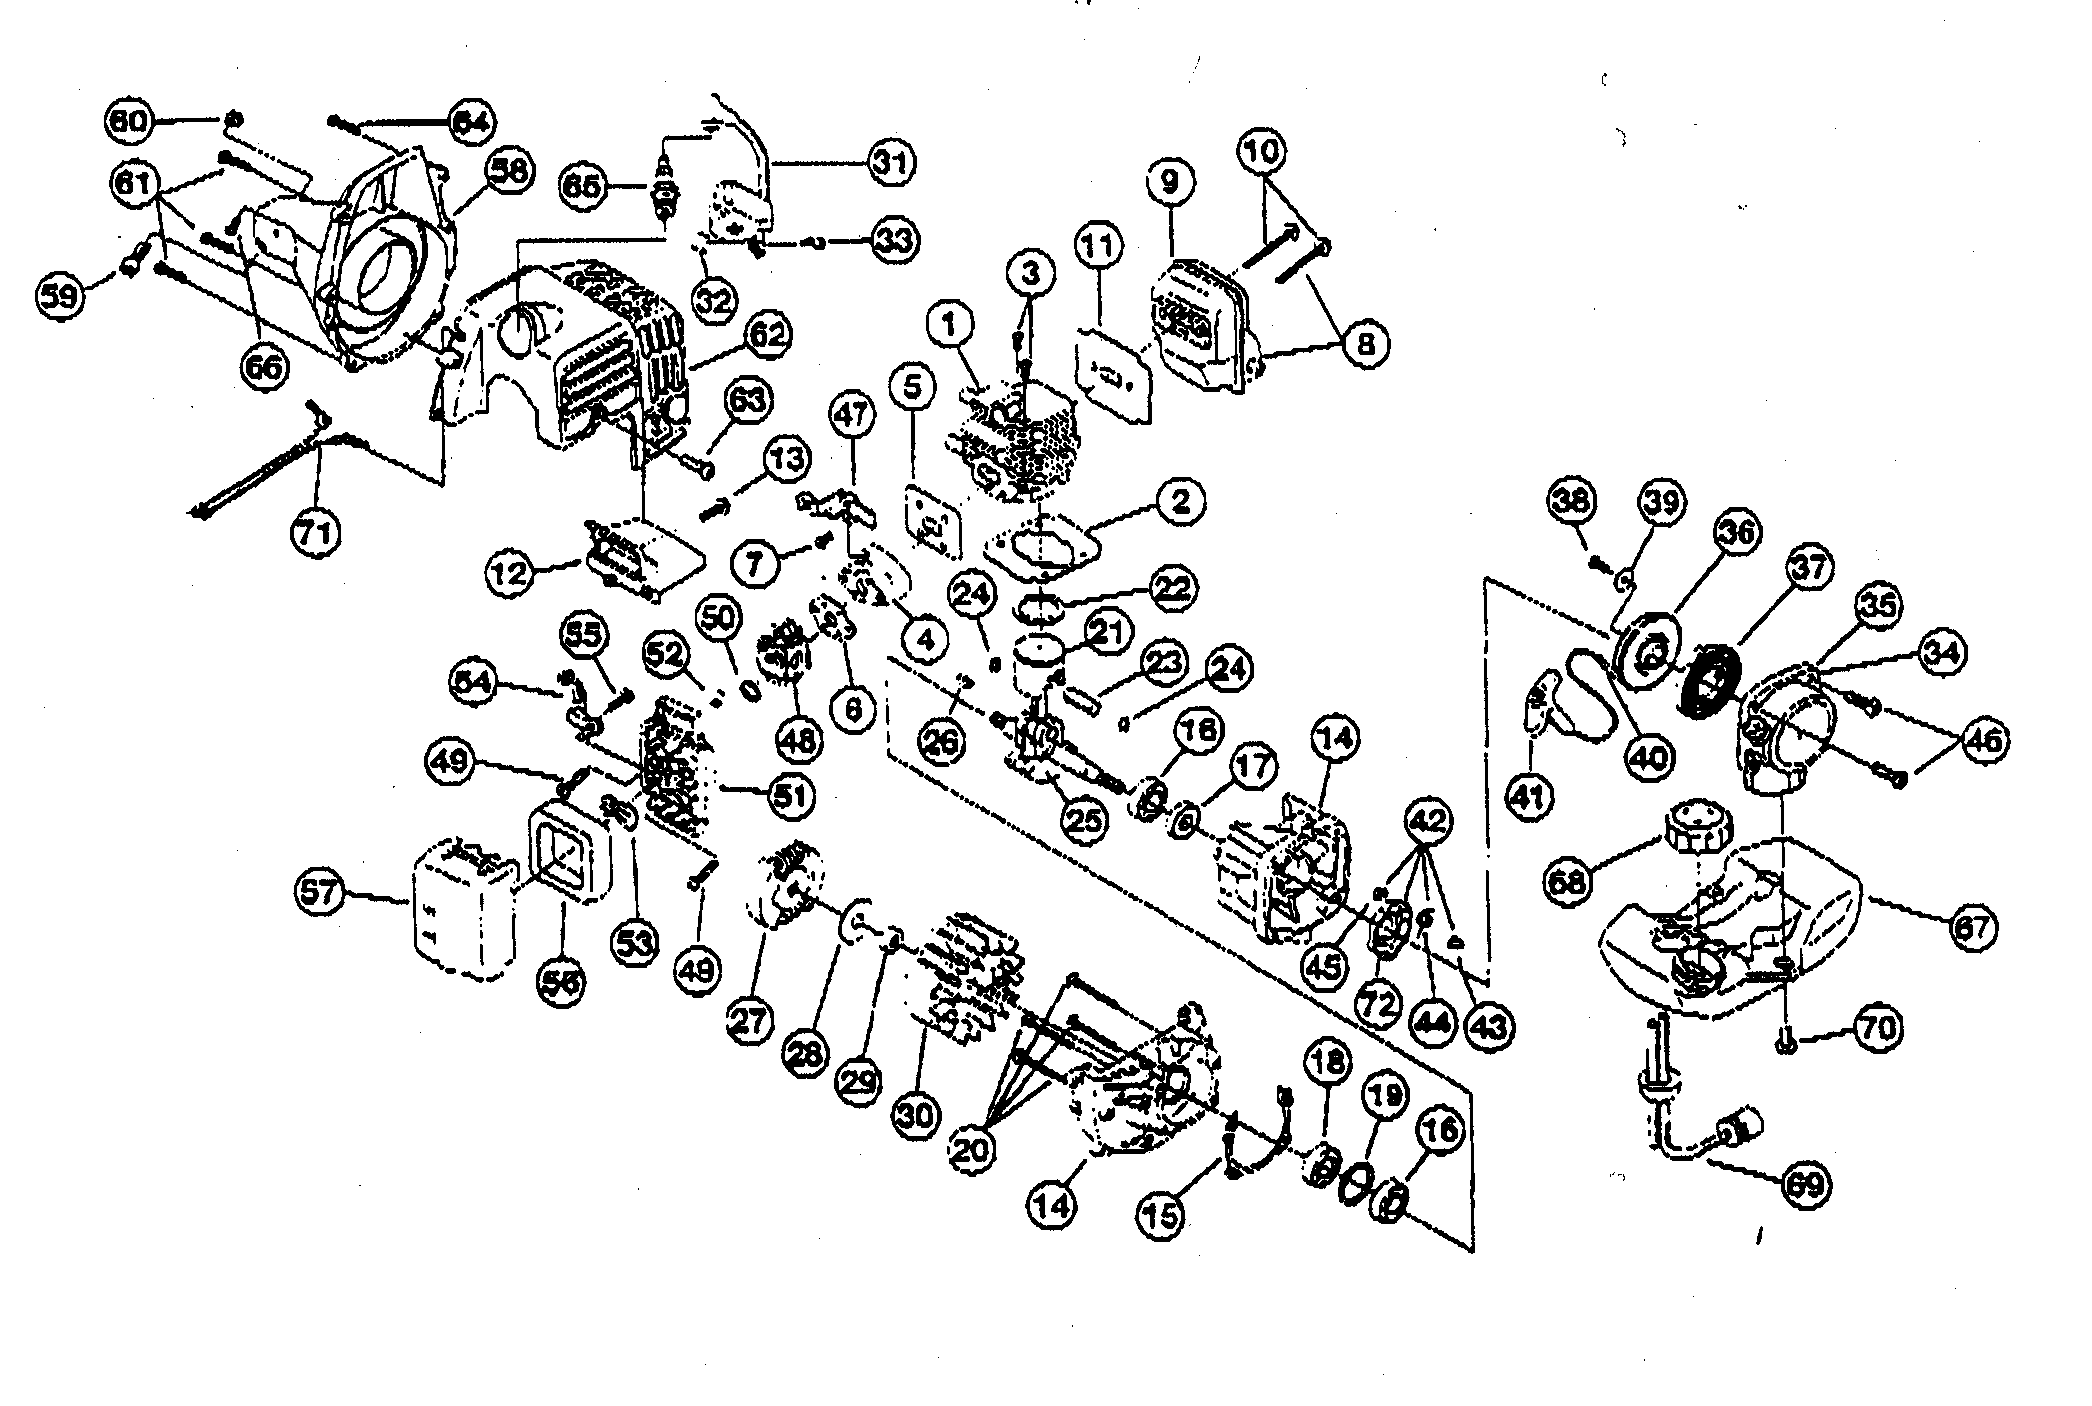 Ryobi 40v Trimmer Parts Diagram